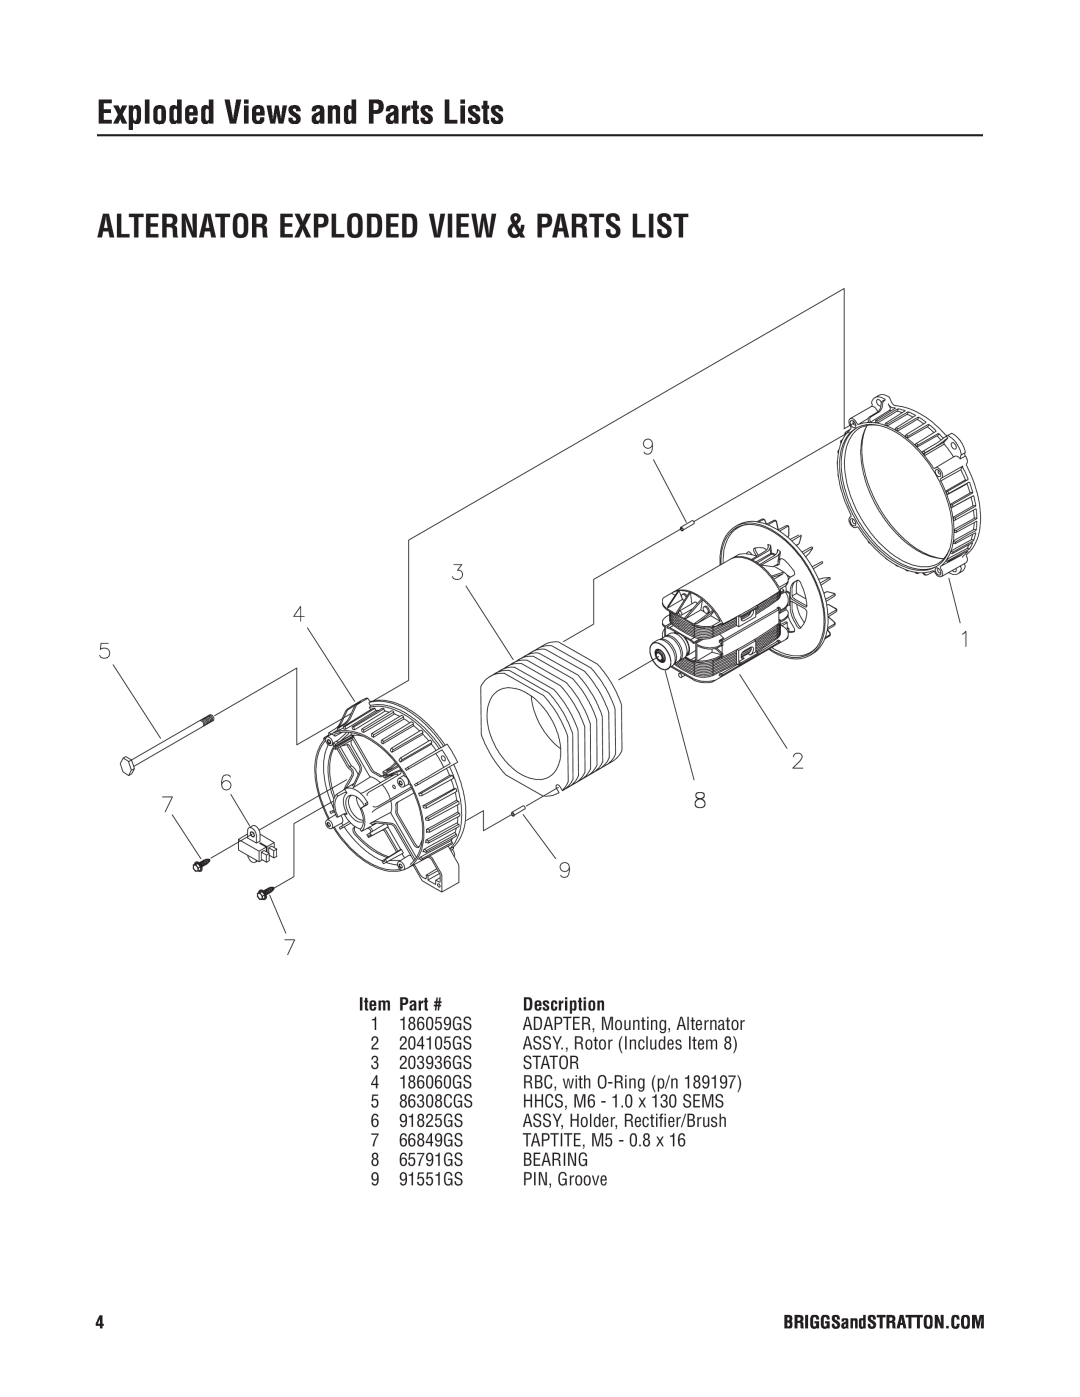 Briggs & Stratton 030380 Alternator Exploded View & Parts List, 186059GS, Exploded Views and Parts Lists, Description 